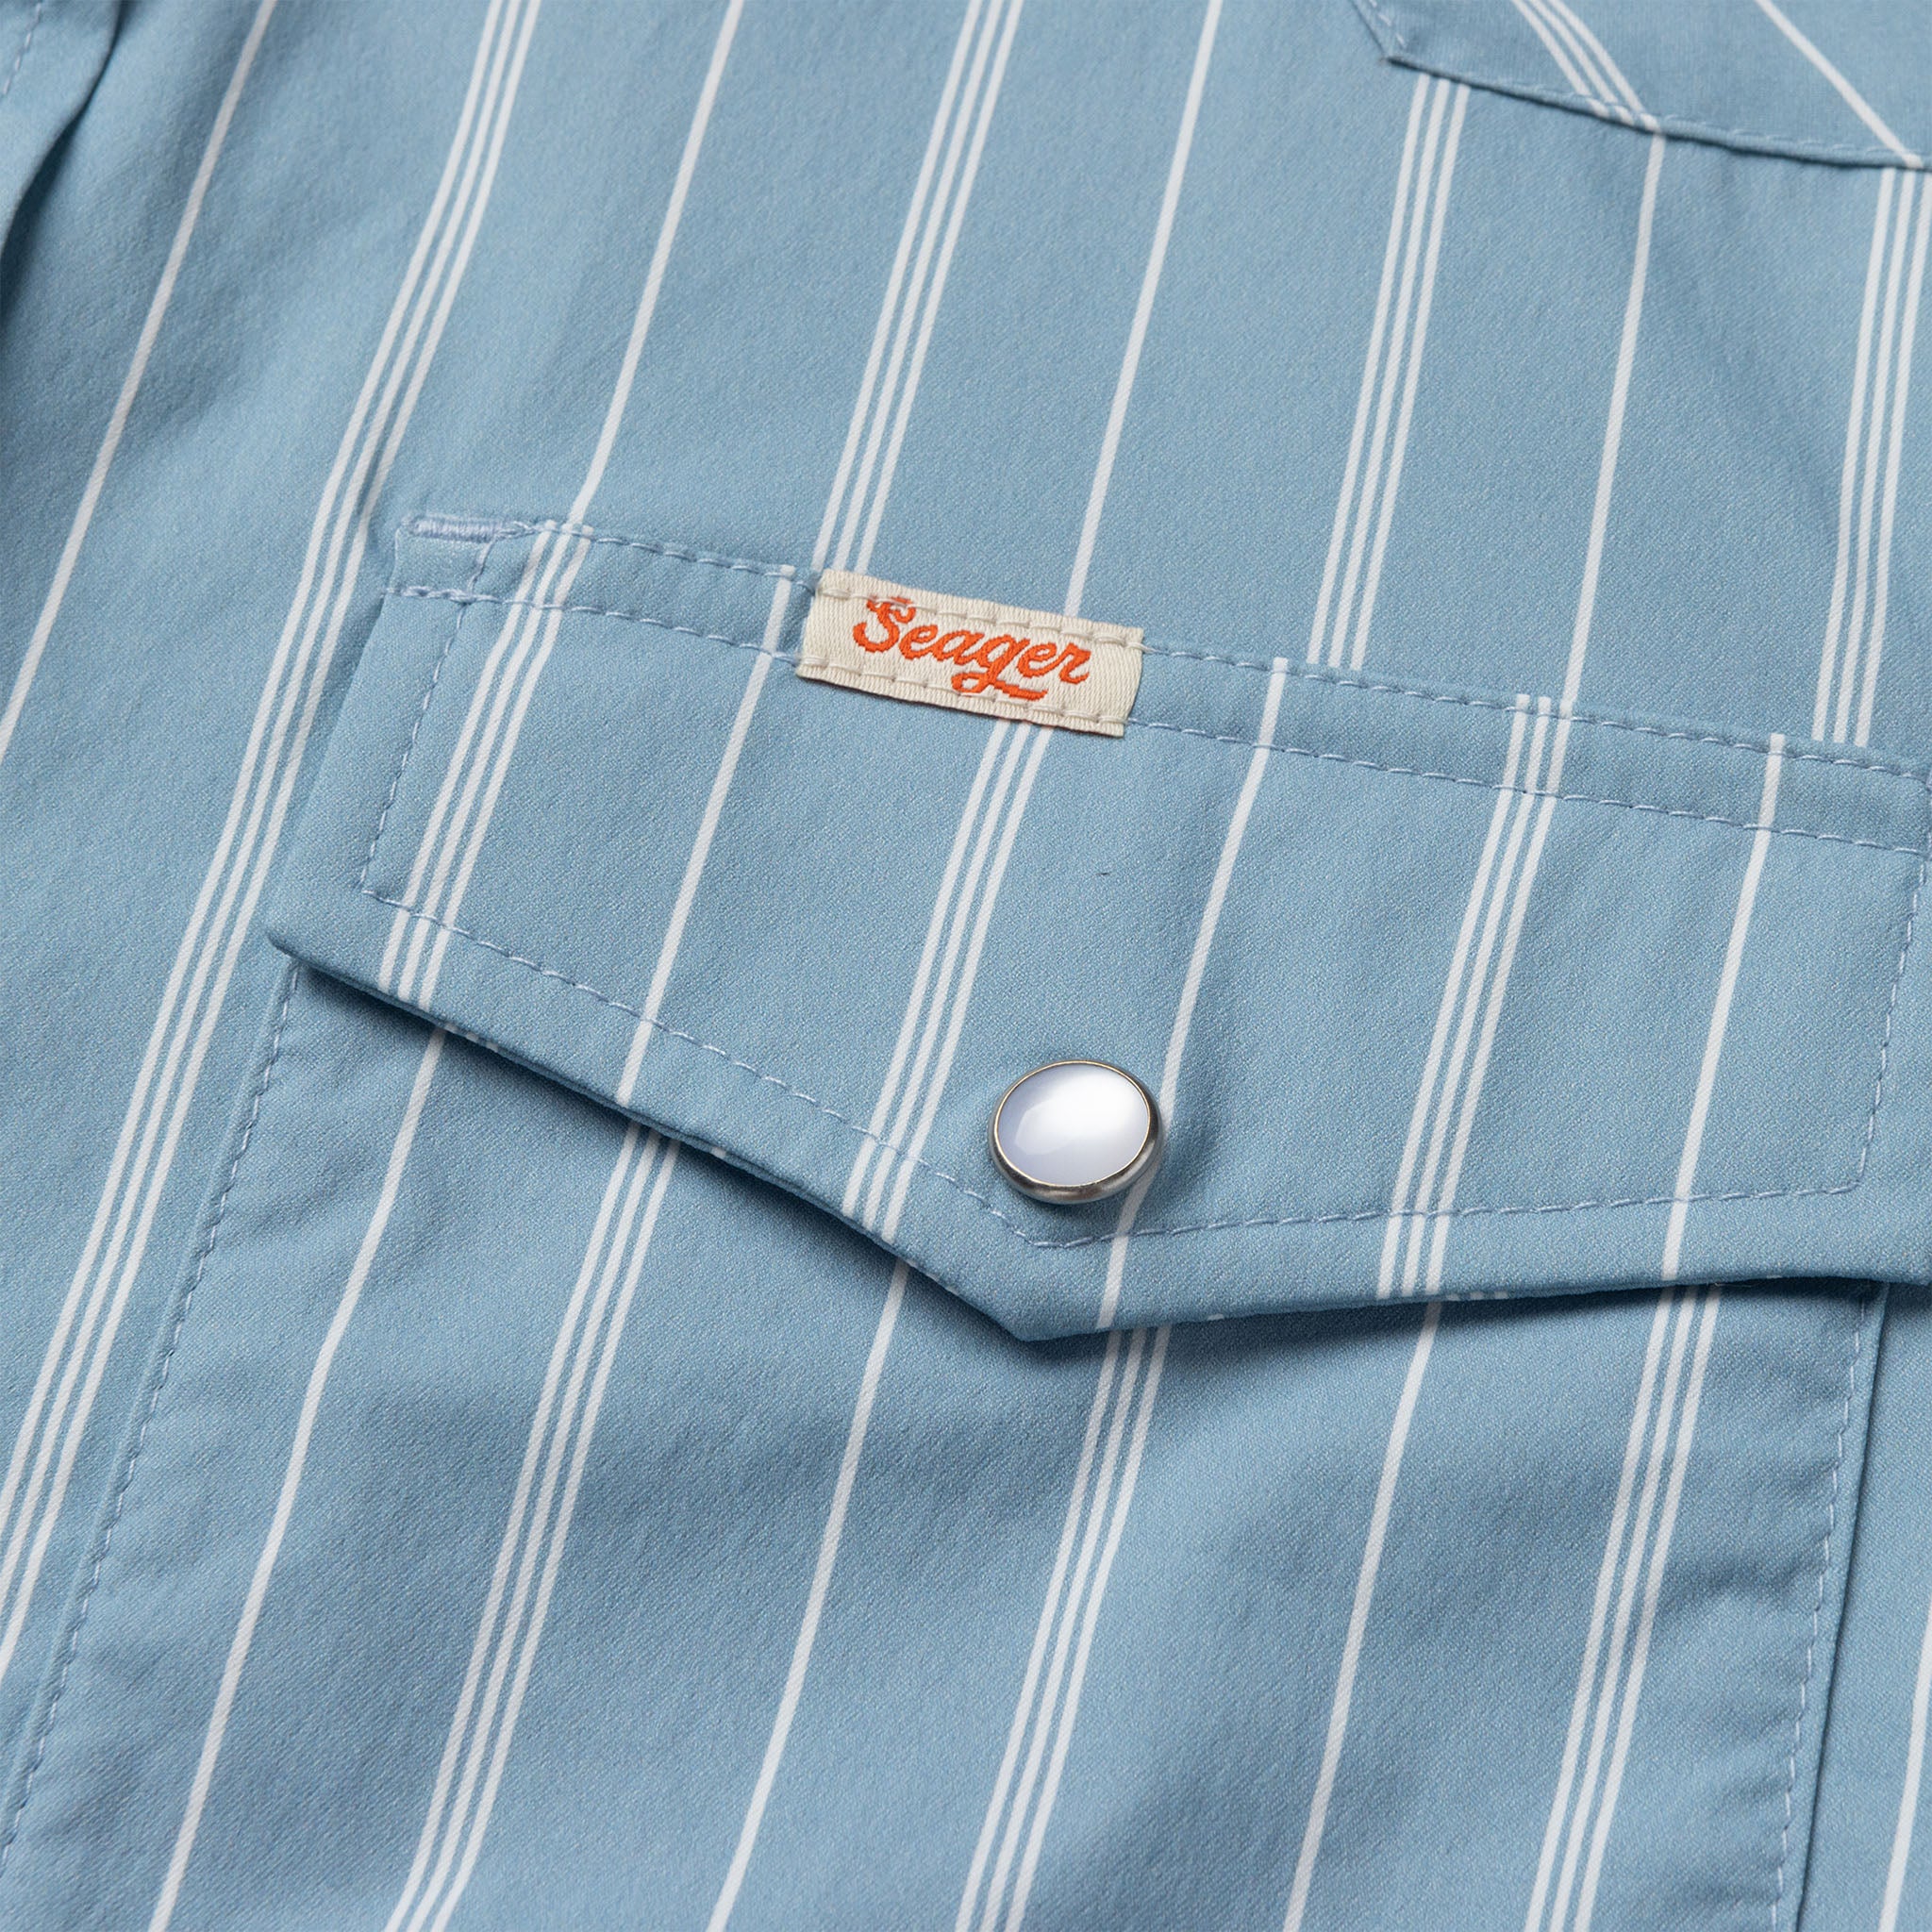 El Ranchero S/S Shirt Slate Blue Stripe